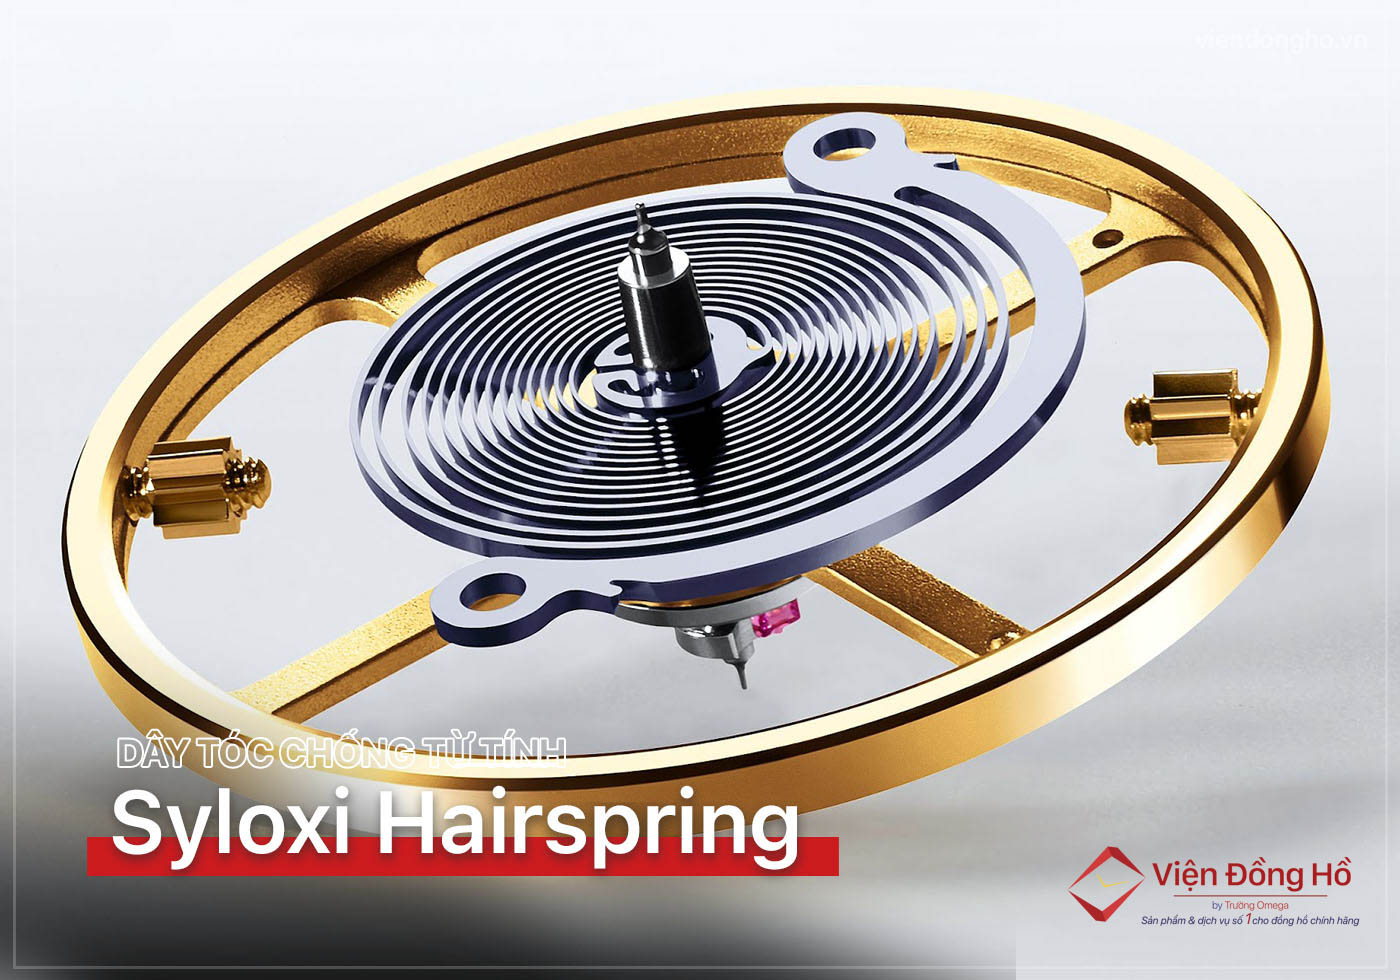 Day toc chong tu tinh Syloxi Hairspring do Rolex phat trien 3